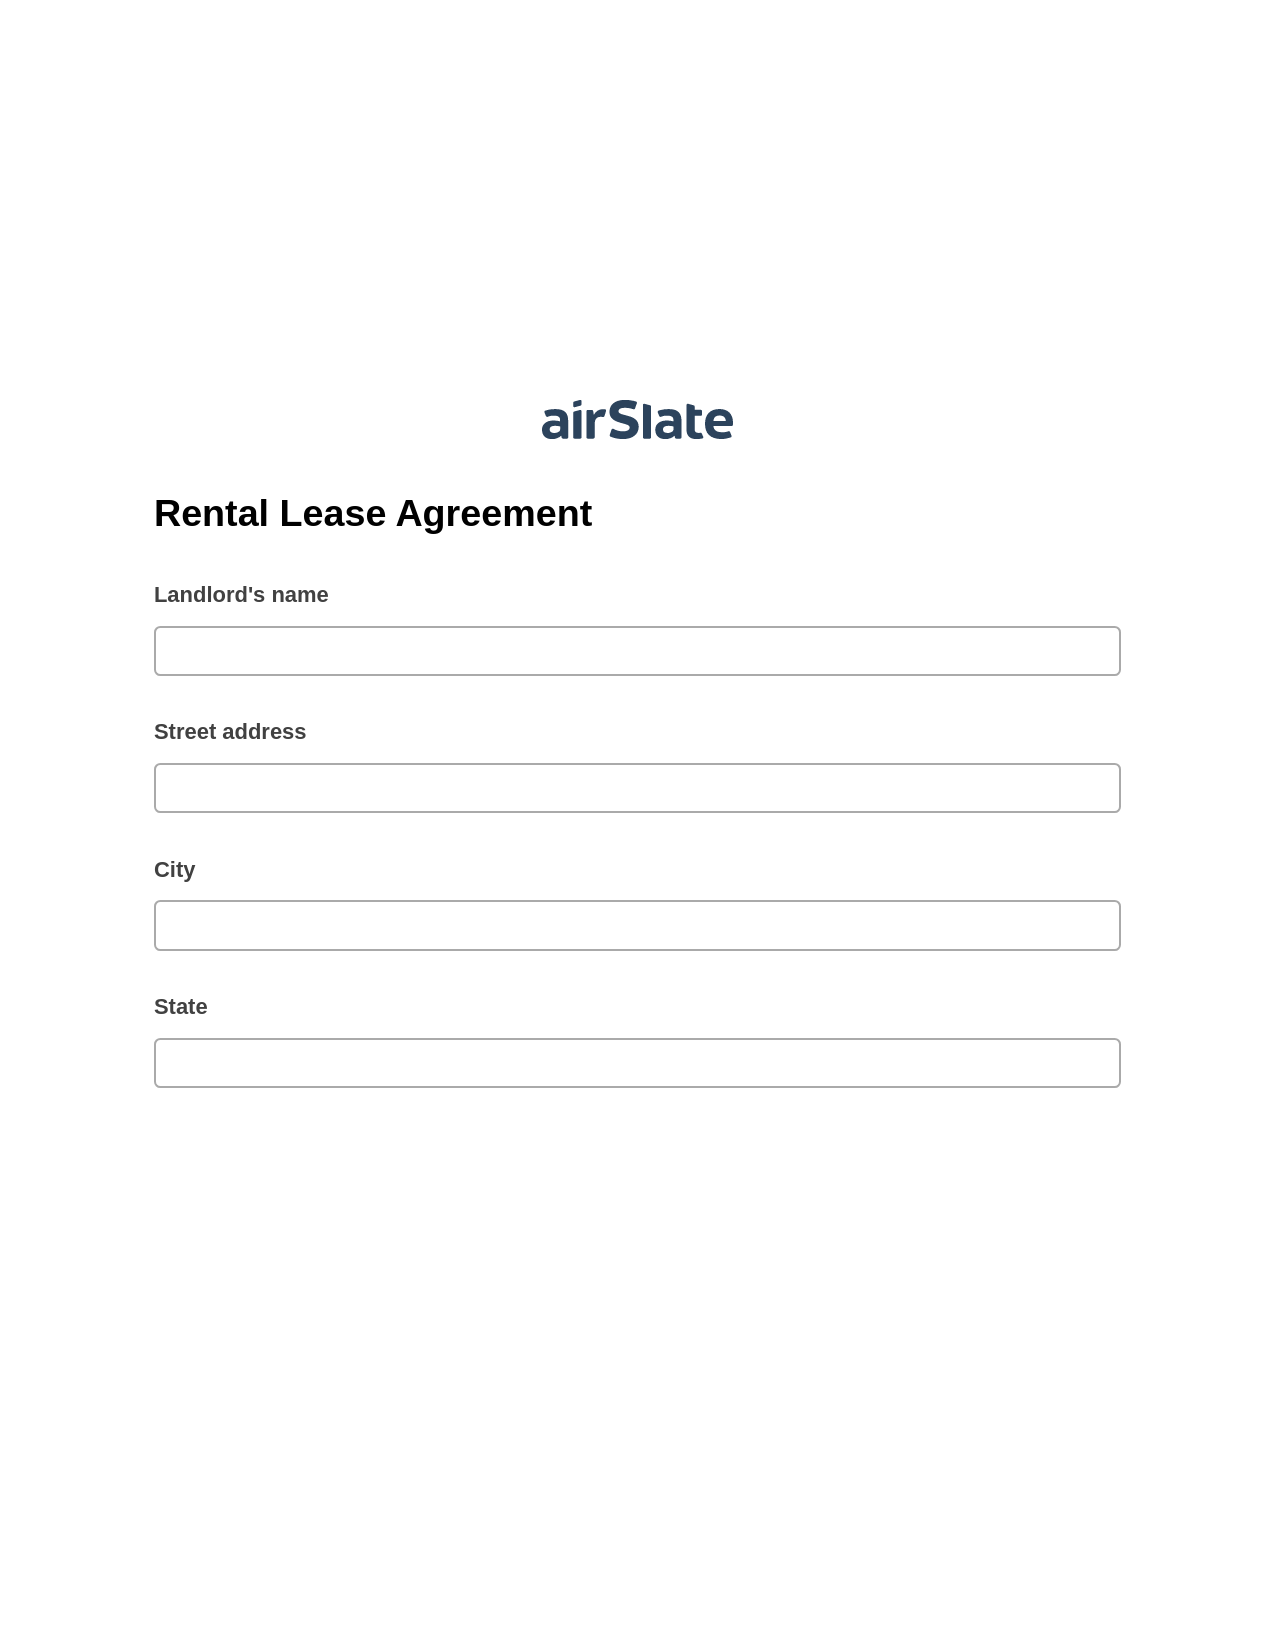 Multirole Rental Lease Agreement Pre-fill from Google Sheet Dropdown Options Bot, Jira Bot, Box Bot